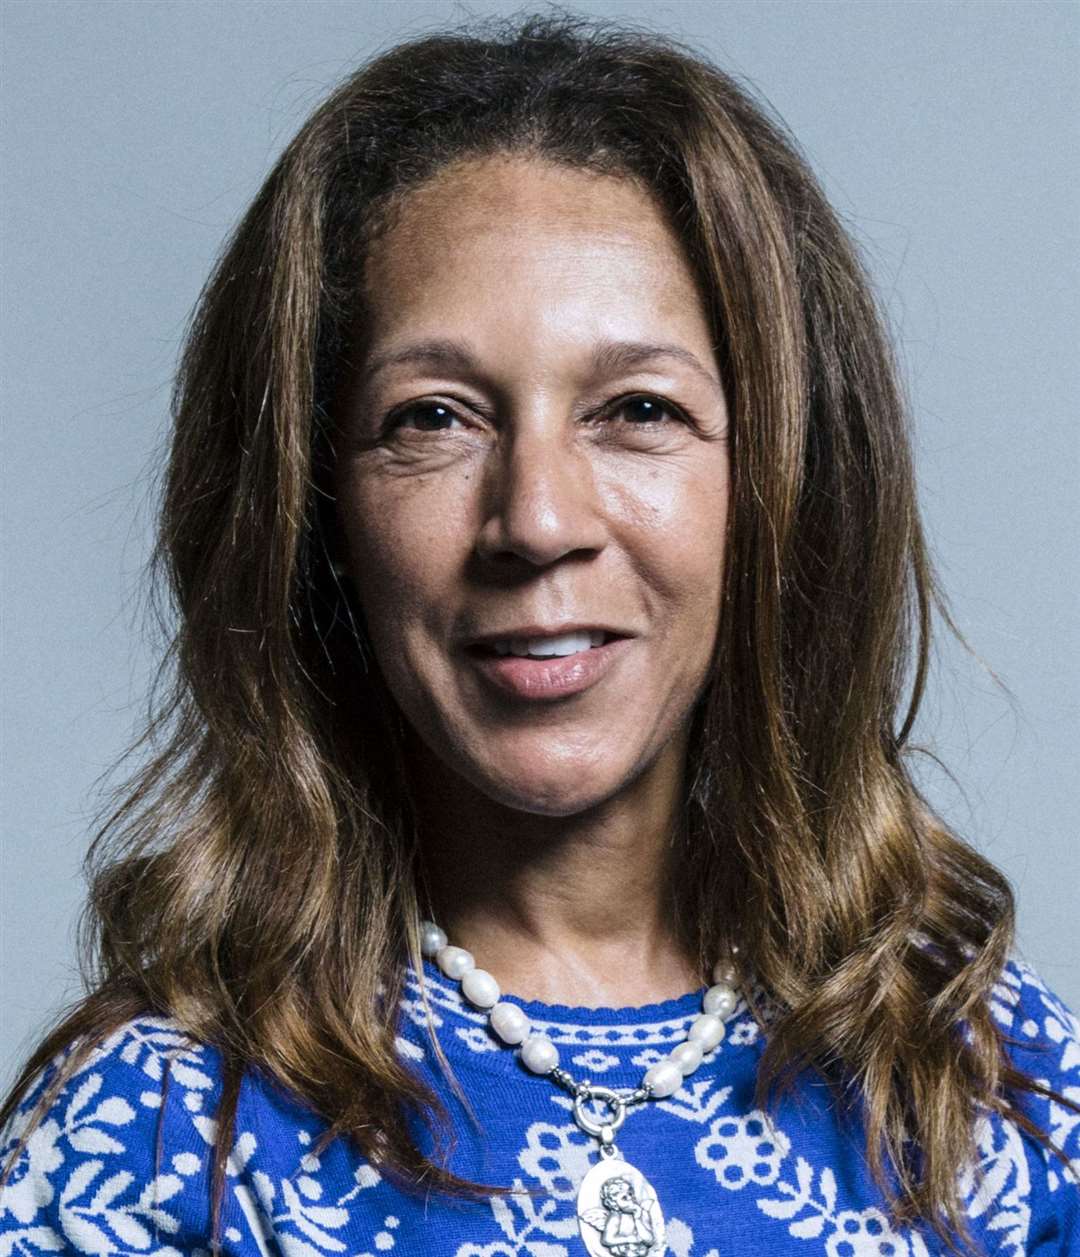 MP Helen Grant